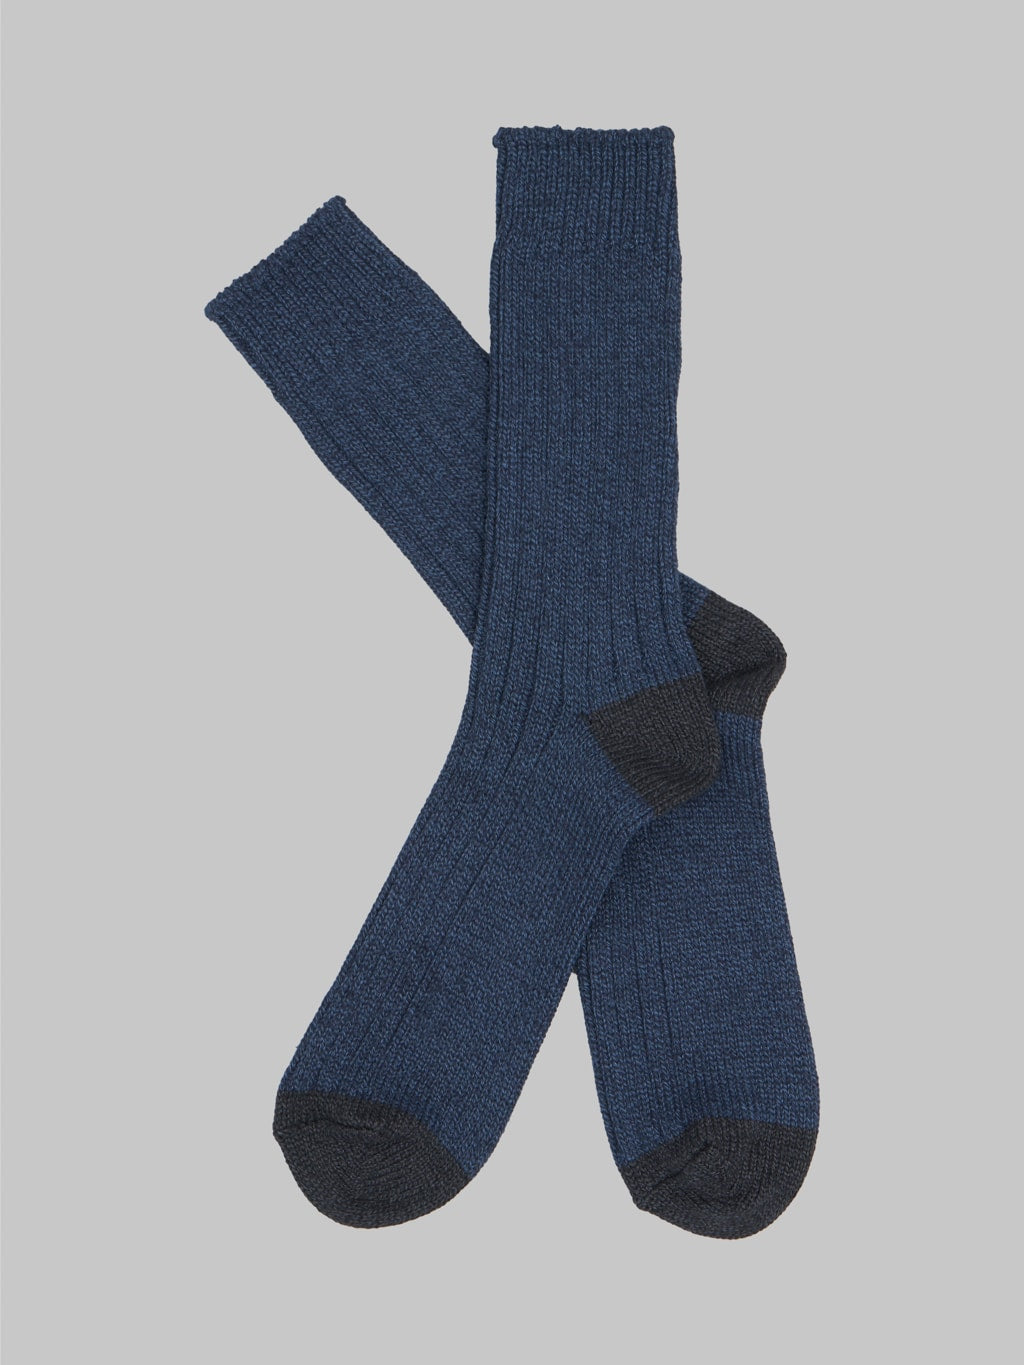 Nishiguchi Kutsushita Luxurious Cotton Ribbed Socks Denim